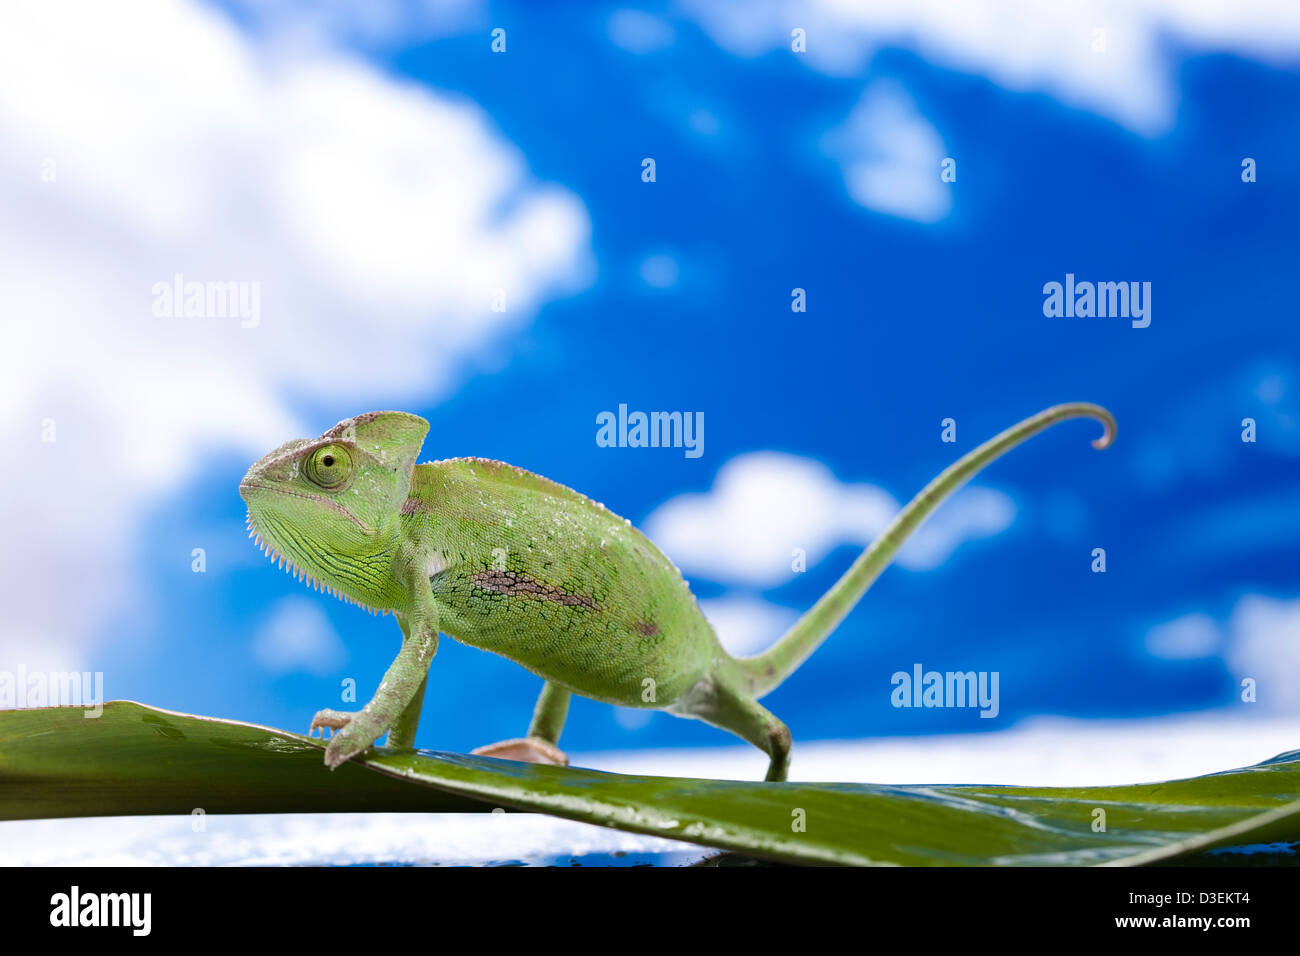 Chameleon on blue sky background Stock Photo